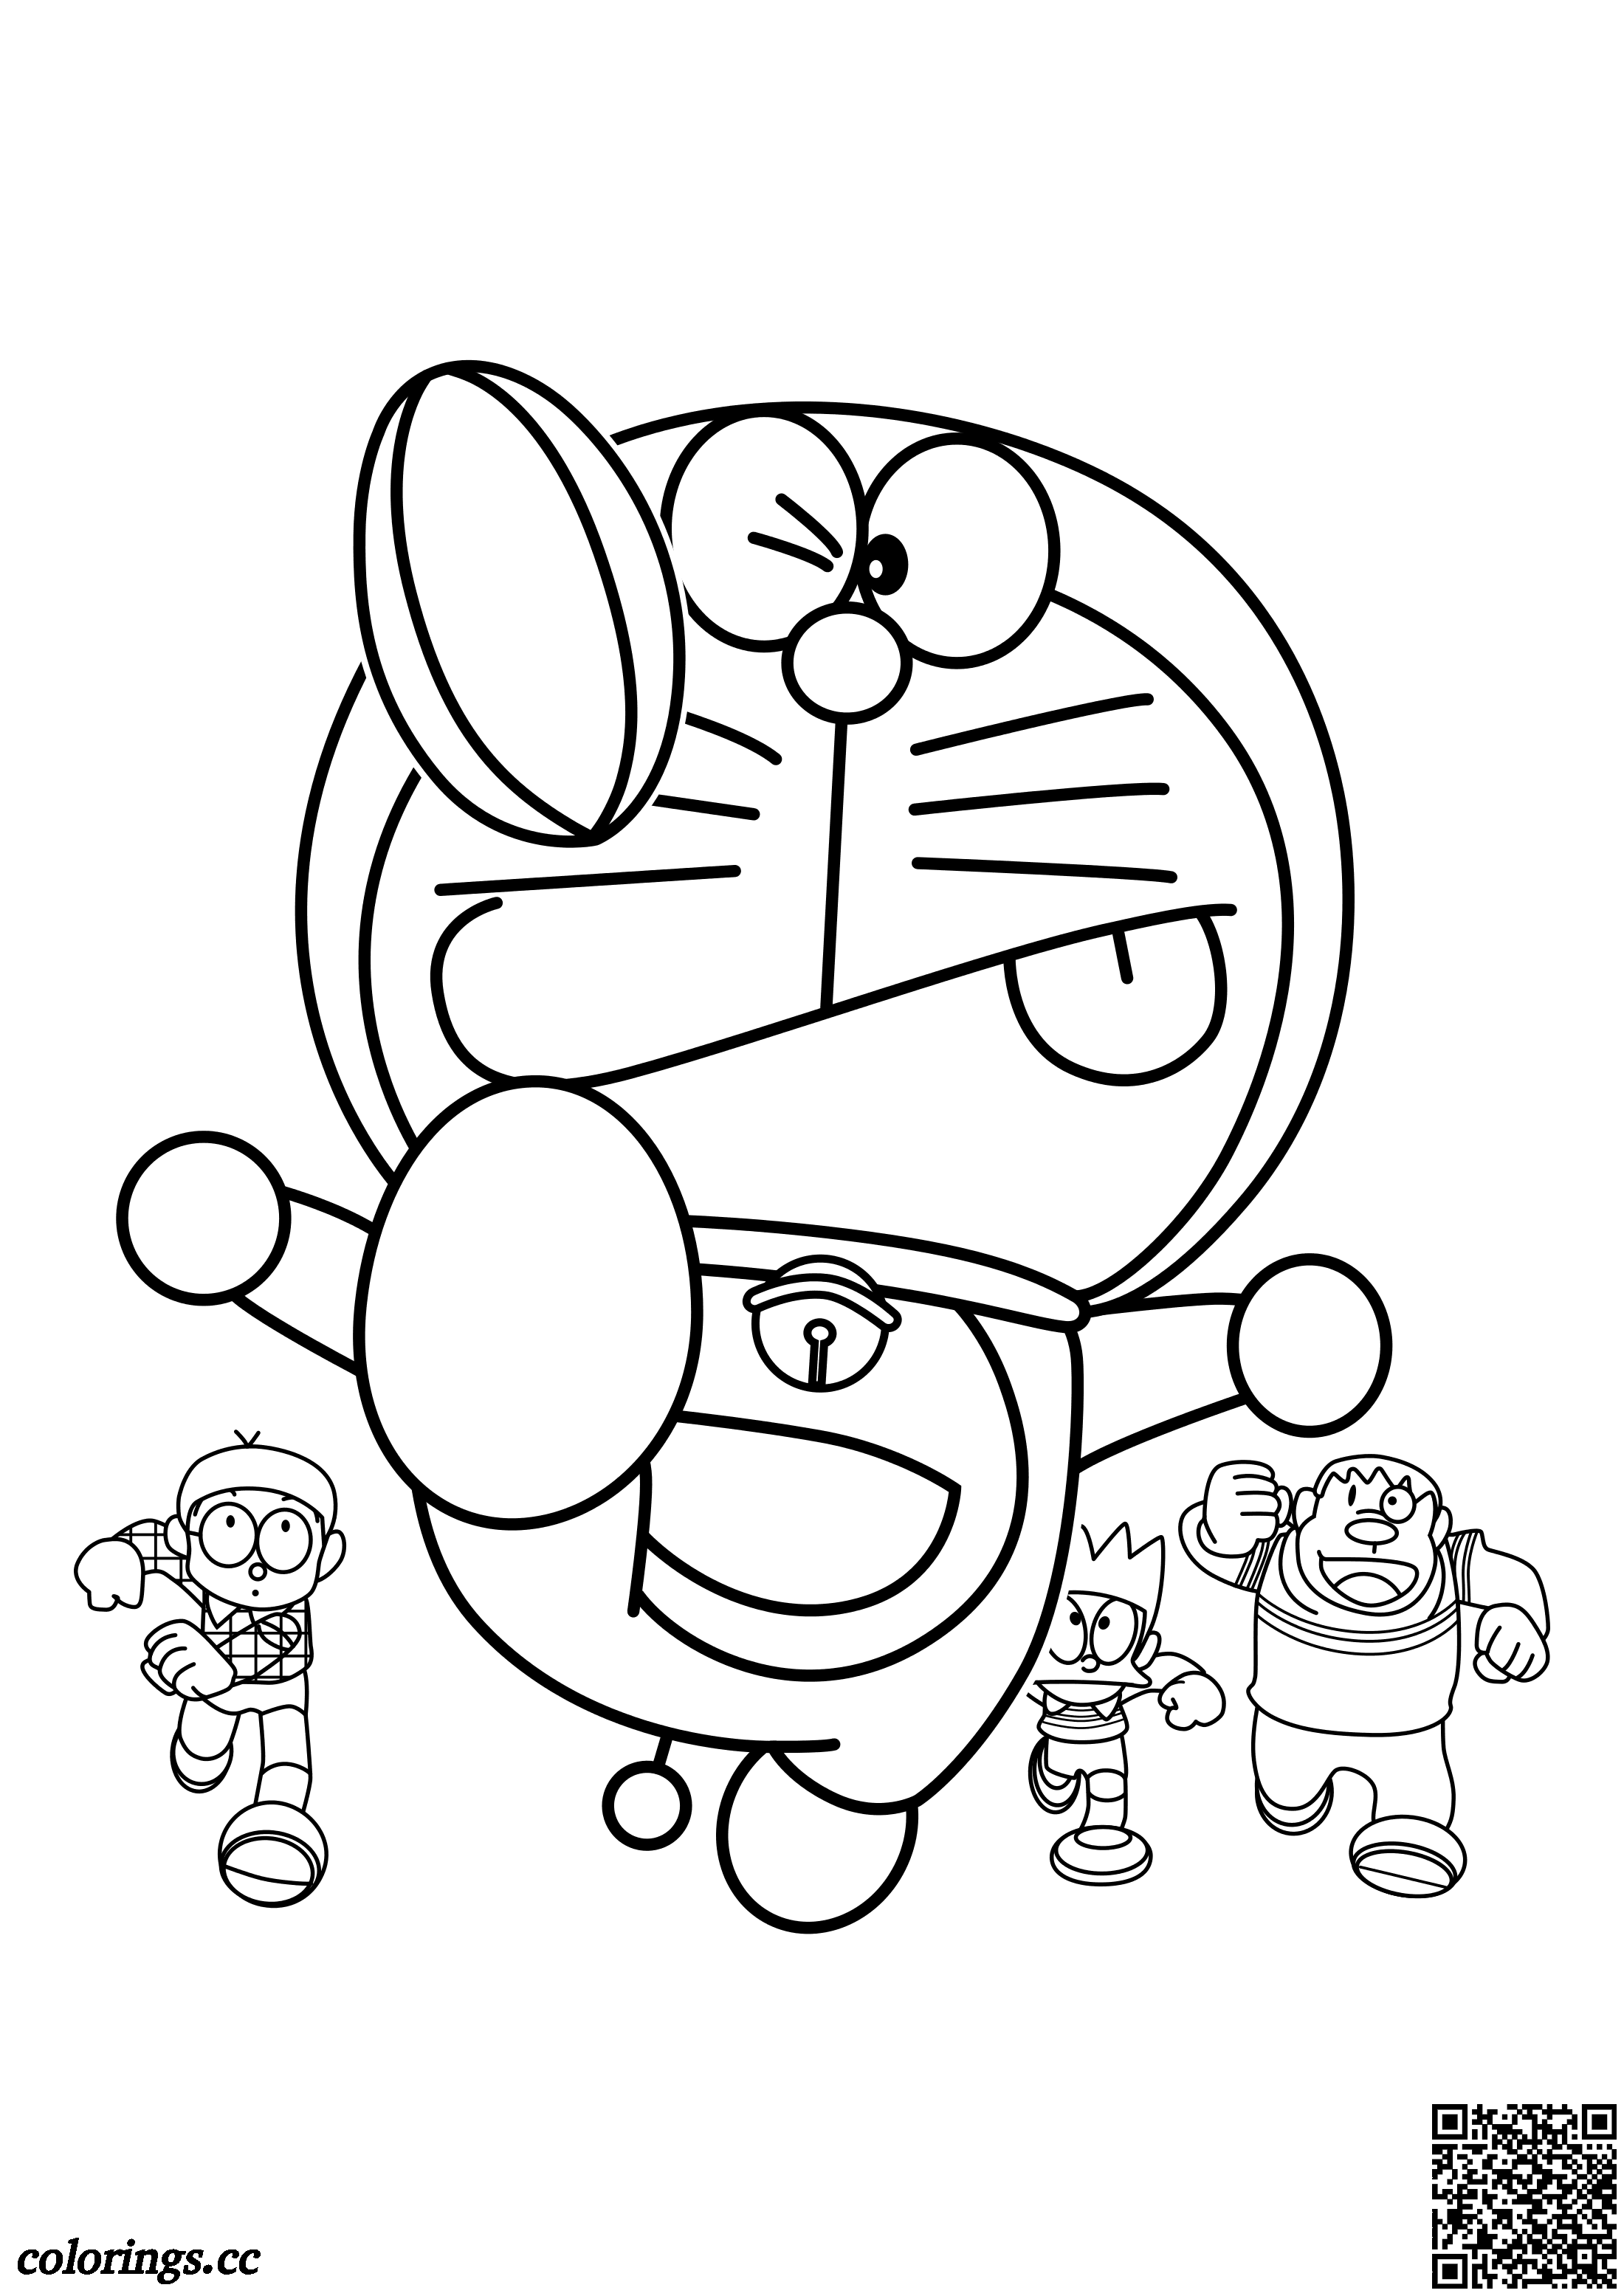 Nobita, Doraemon, Suneo and Gian coloring pages, Doraemon coloring ...